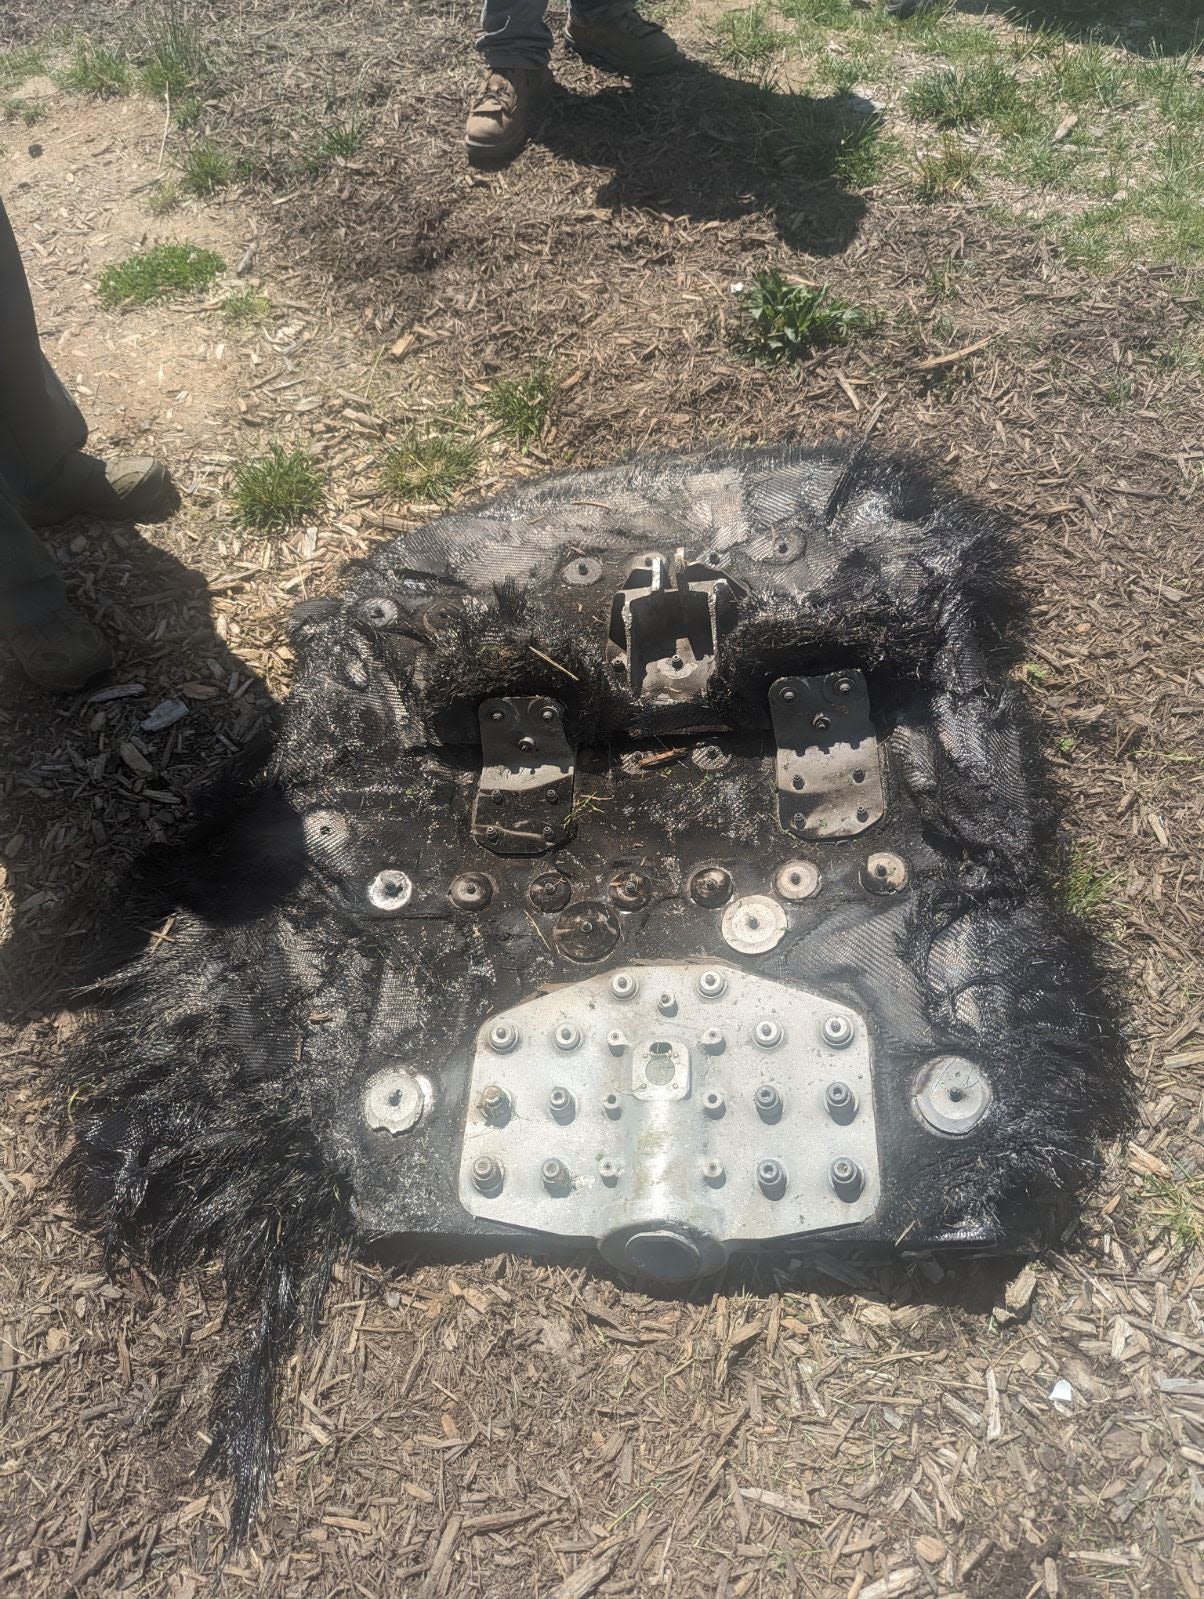 Piece of suspected space debris found in rural North Carolina